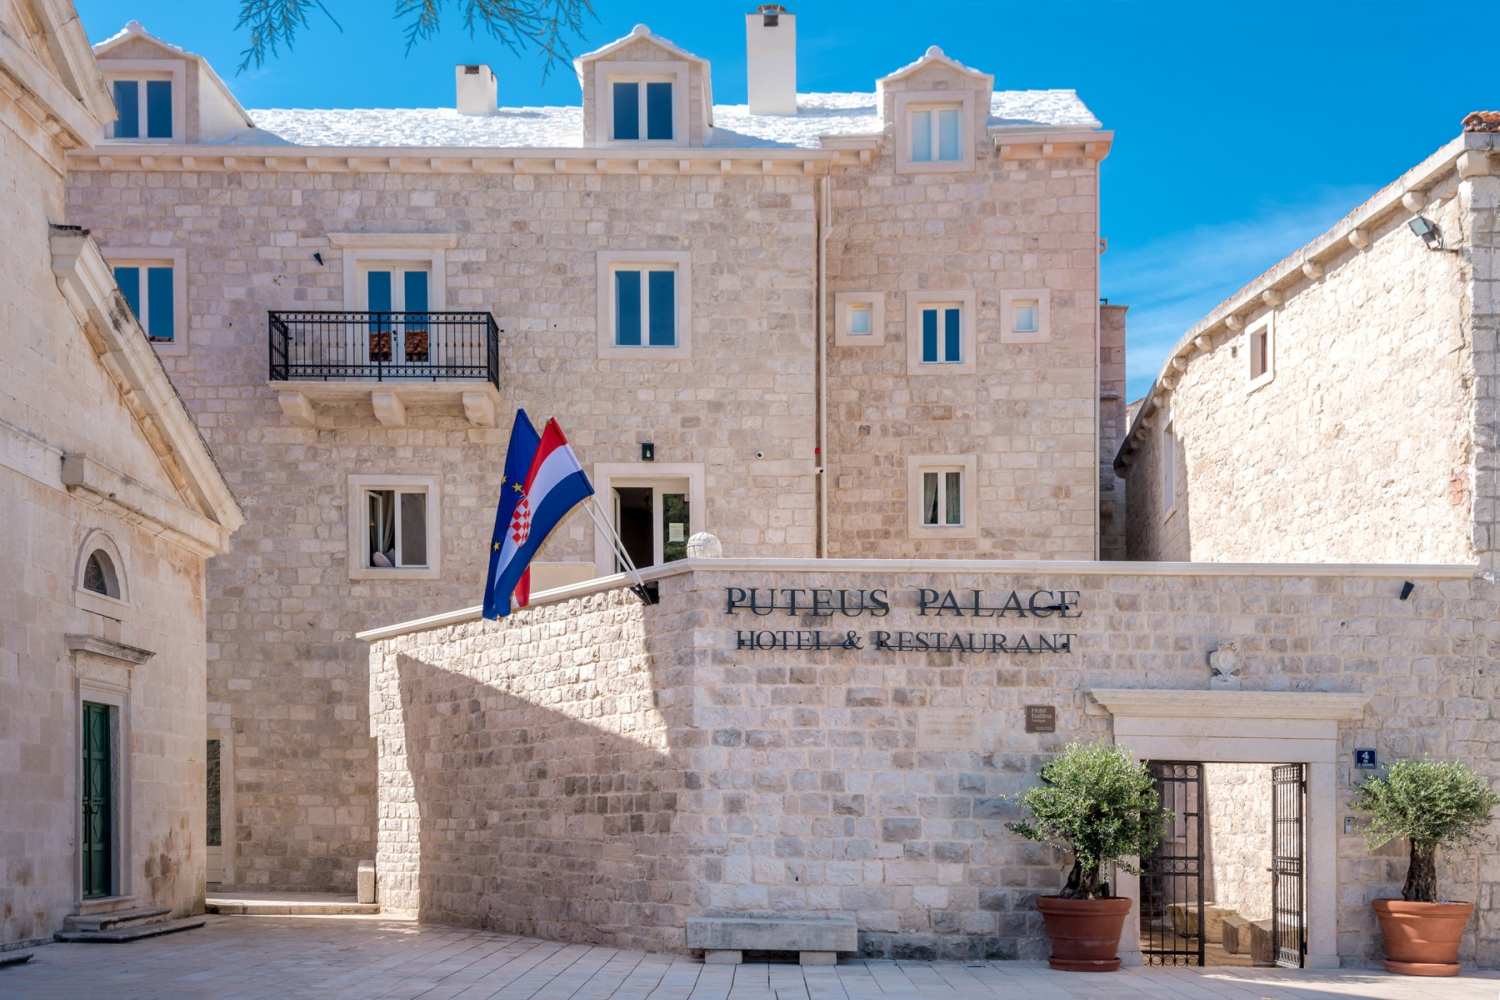 Puteus Palace Heritage Hotel, Dalmatia - Croatia